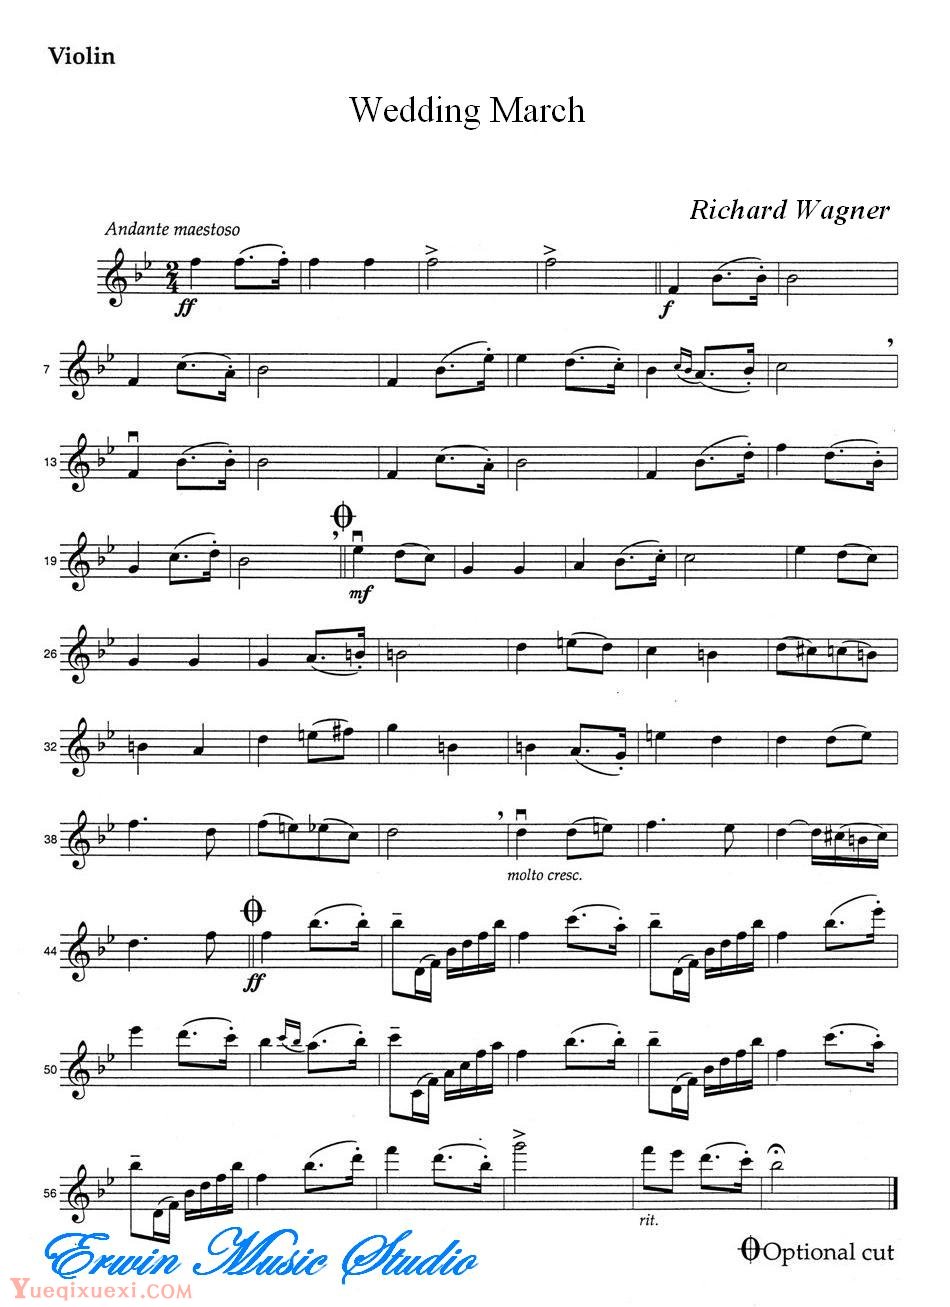 理查德瓦格纳-婚礼进行曲 弦乐三重奏分谱Violin  Richard Wagner, Wedding March